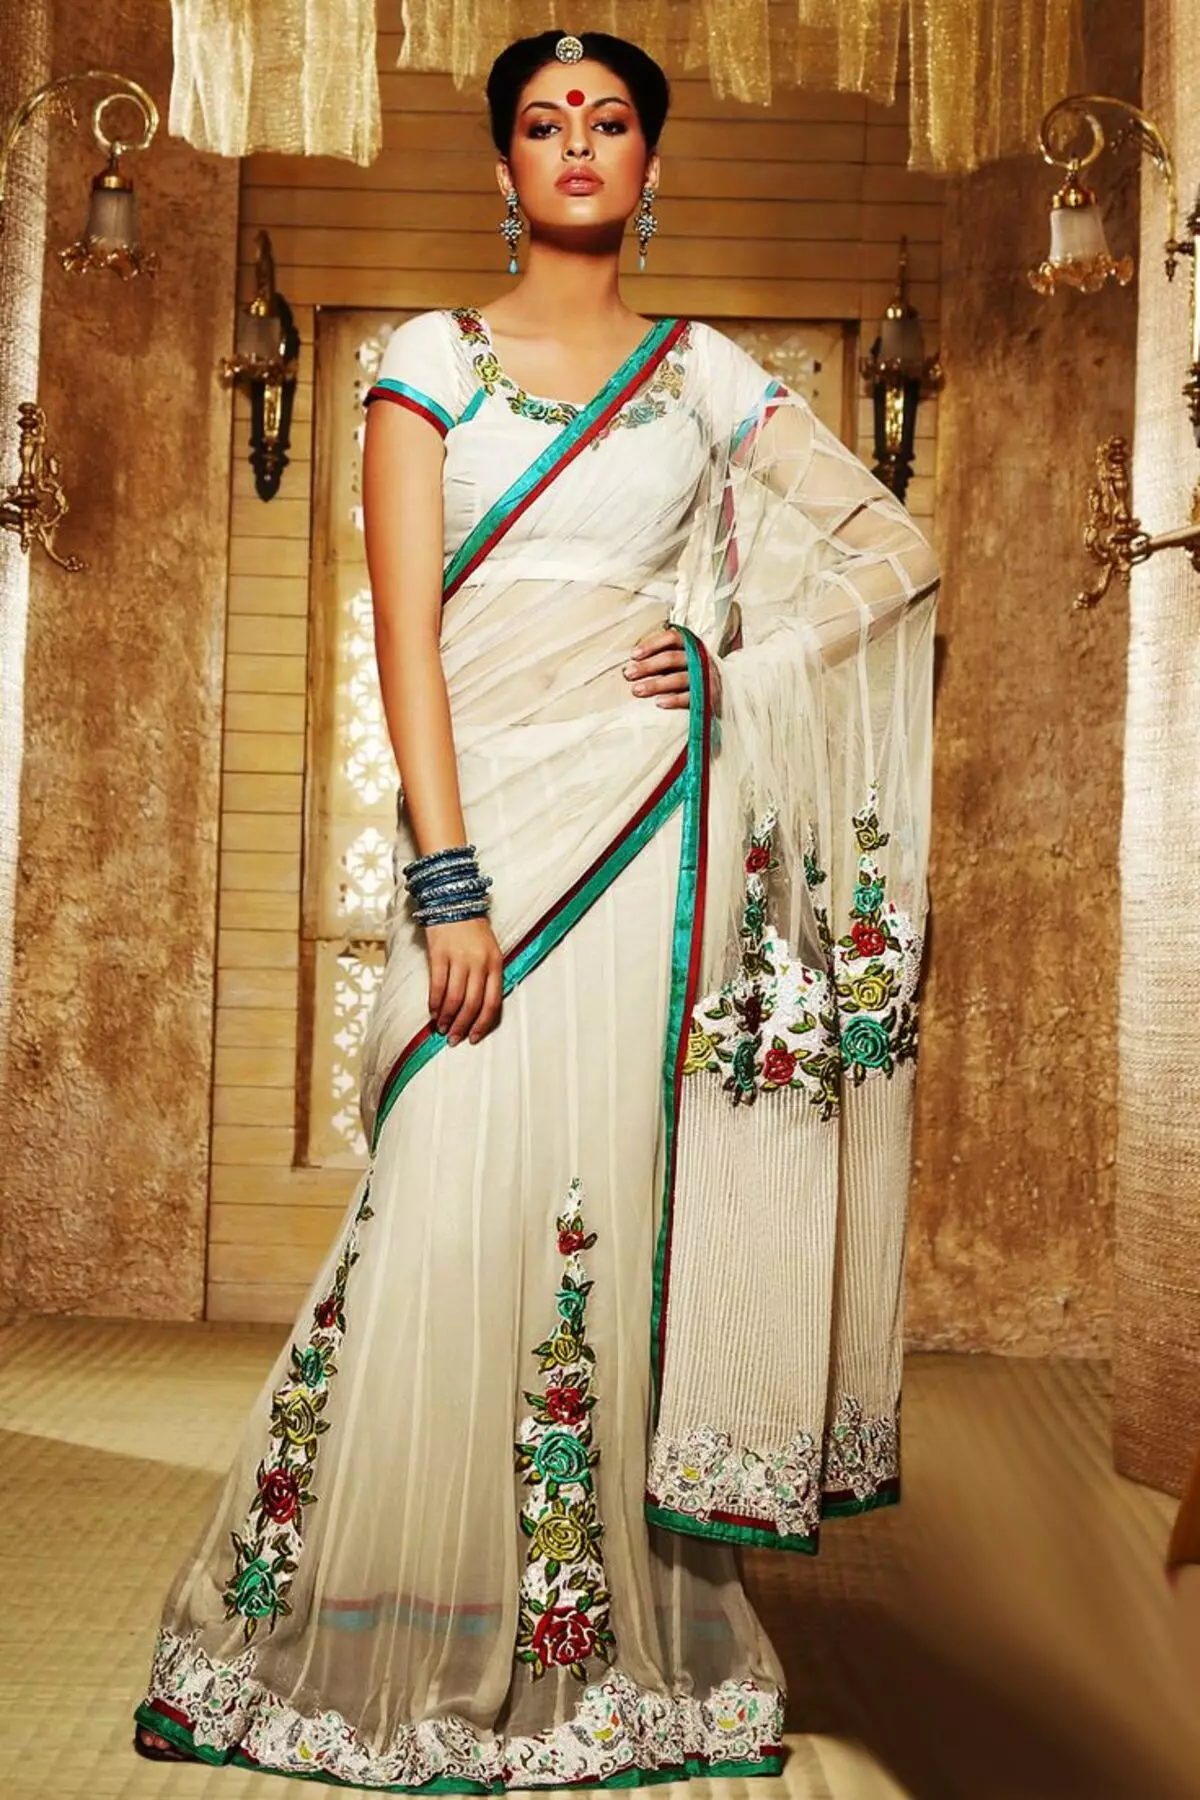 Сари страна. Наряд Сари Индия. Традиционная одежда Индии для женщин Сари. Сари одежда в Индии. Сари (женская одежда в Индии).